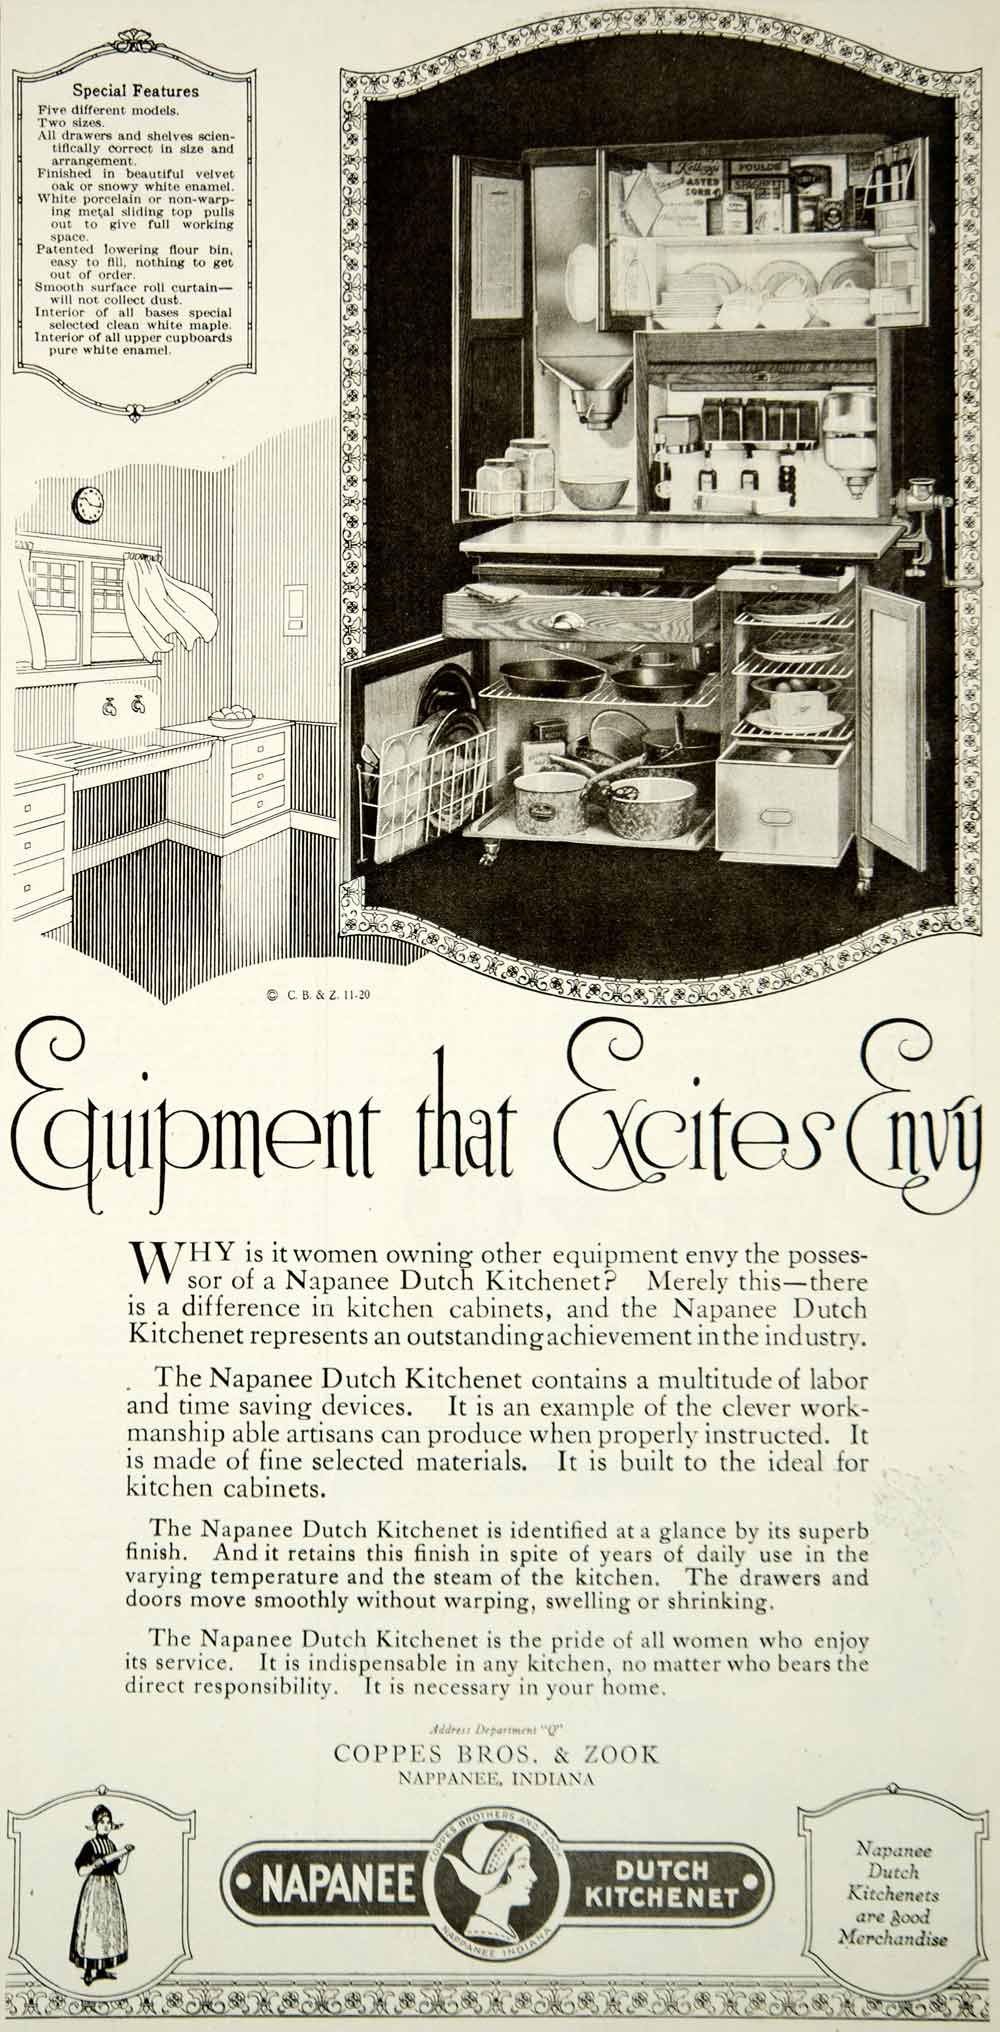 1920 Ad Napanee Dutch Kitchenet Coppes Bros. & Zook Indiana Kitchen Equipment